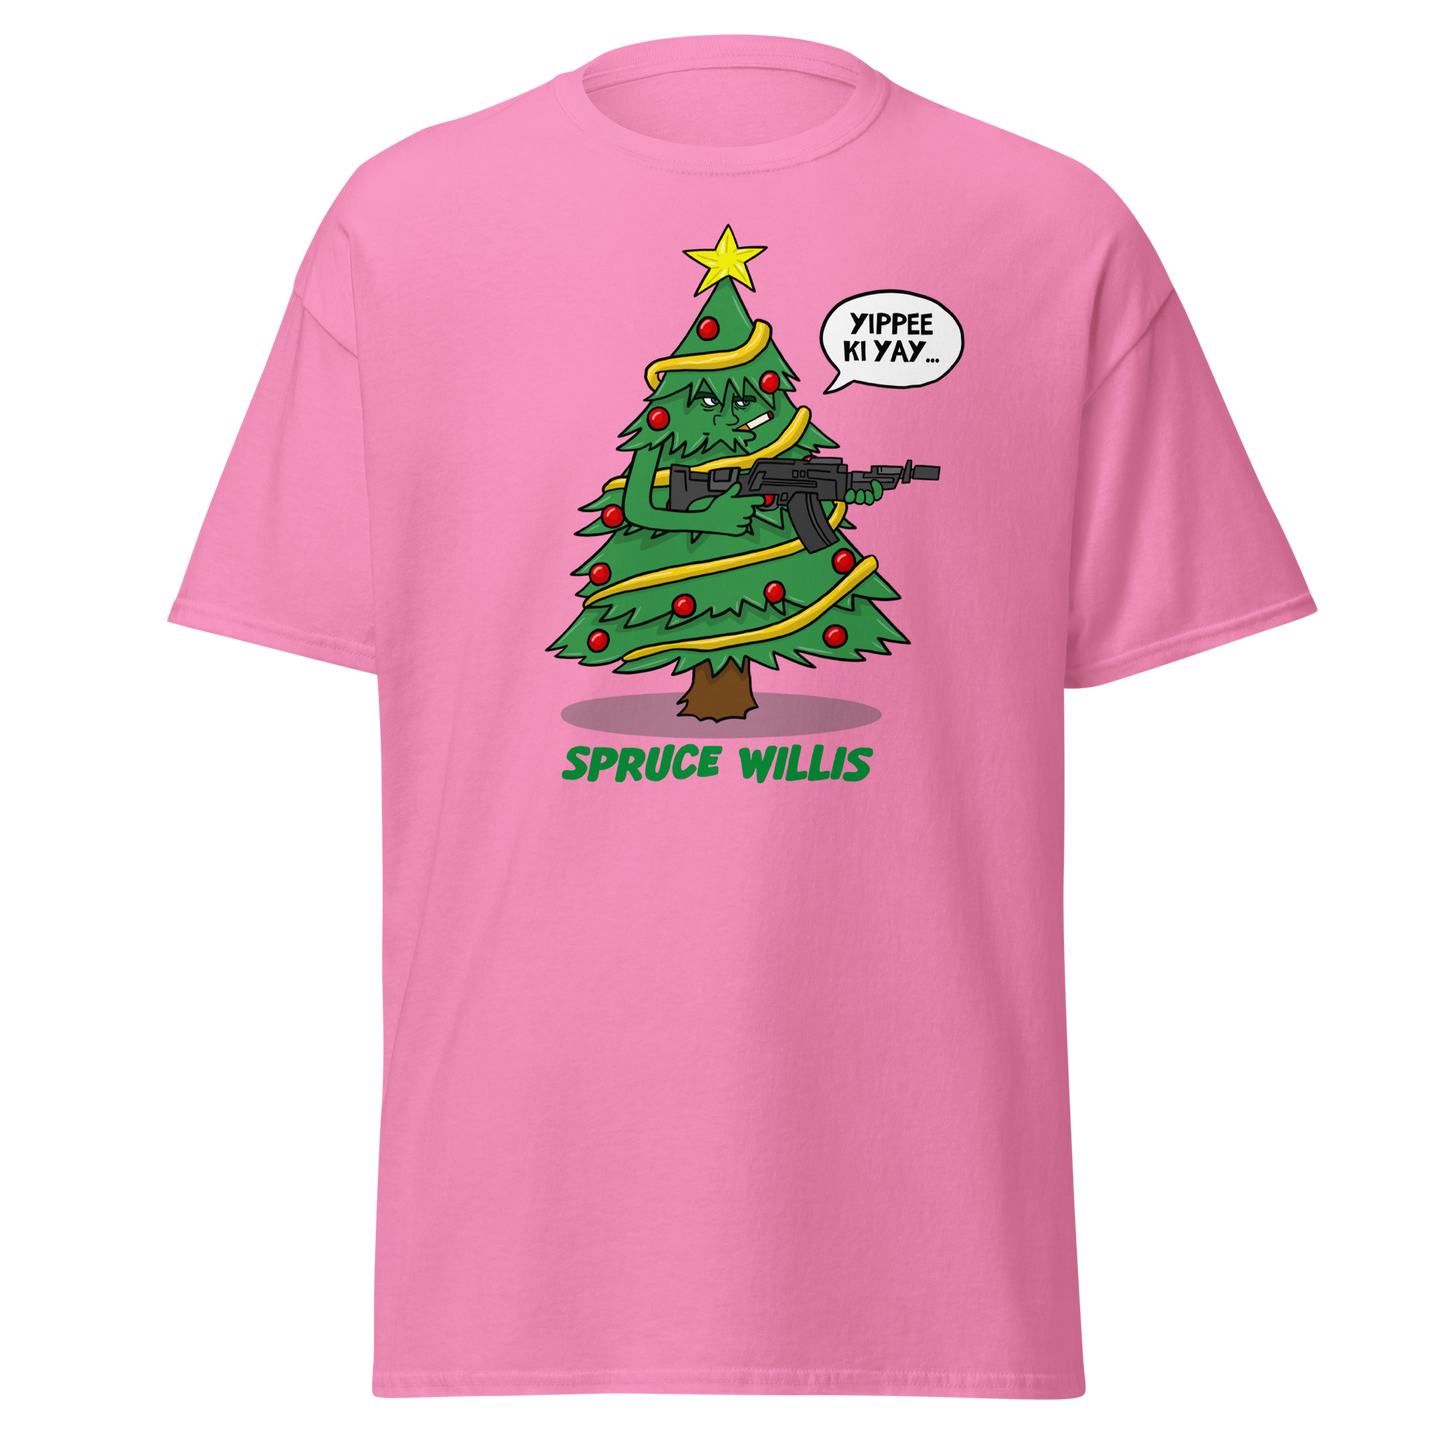 Die Hard Christmas T-Shirt